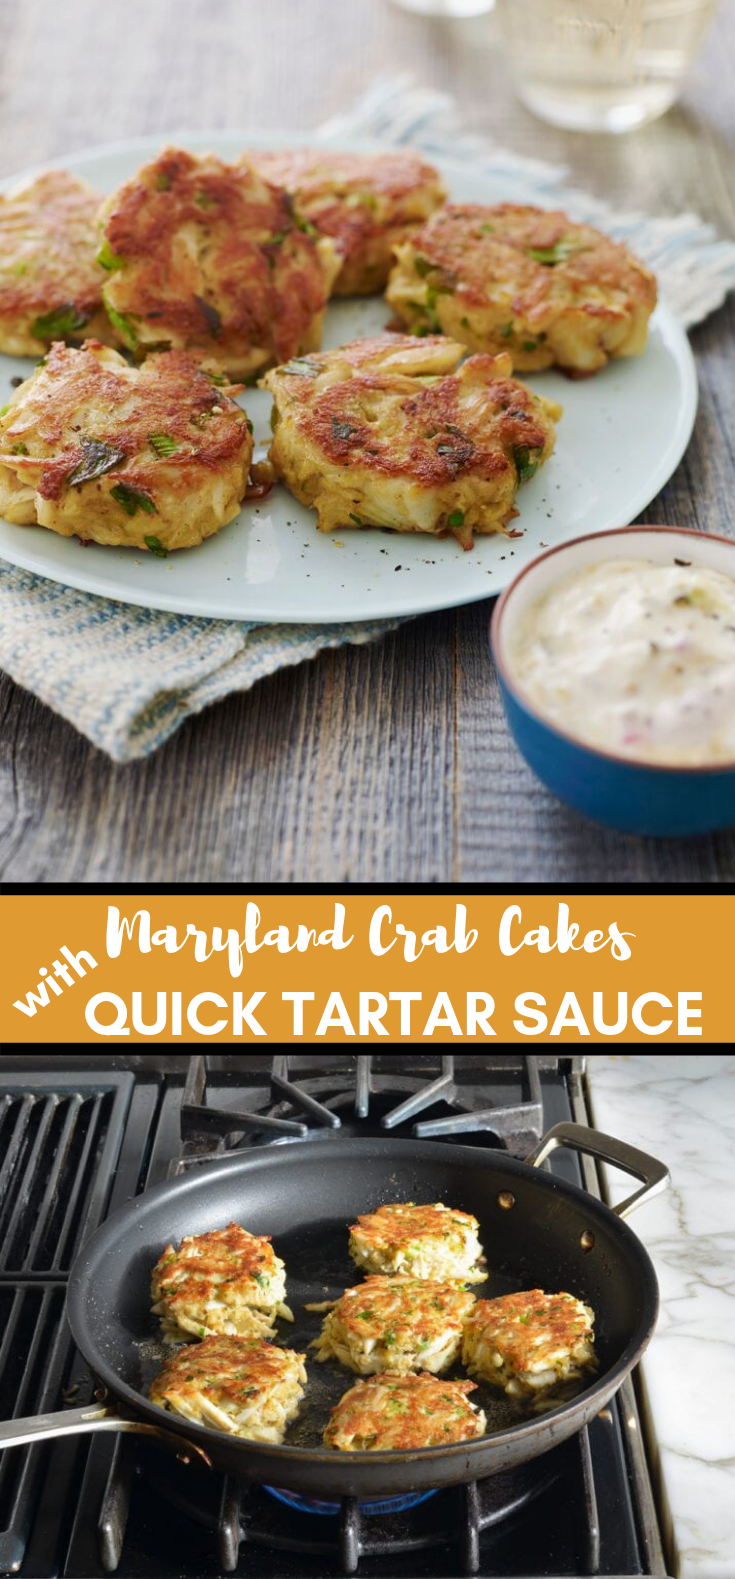 Maryland Crab Cakes with Quick Tartar Sauce #Meal #Seafood